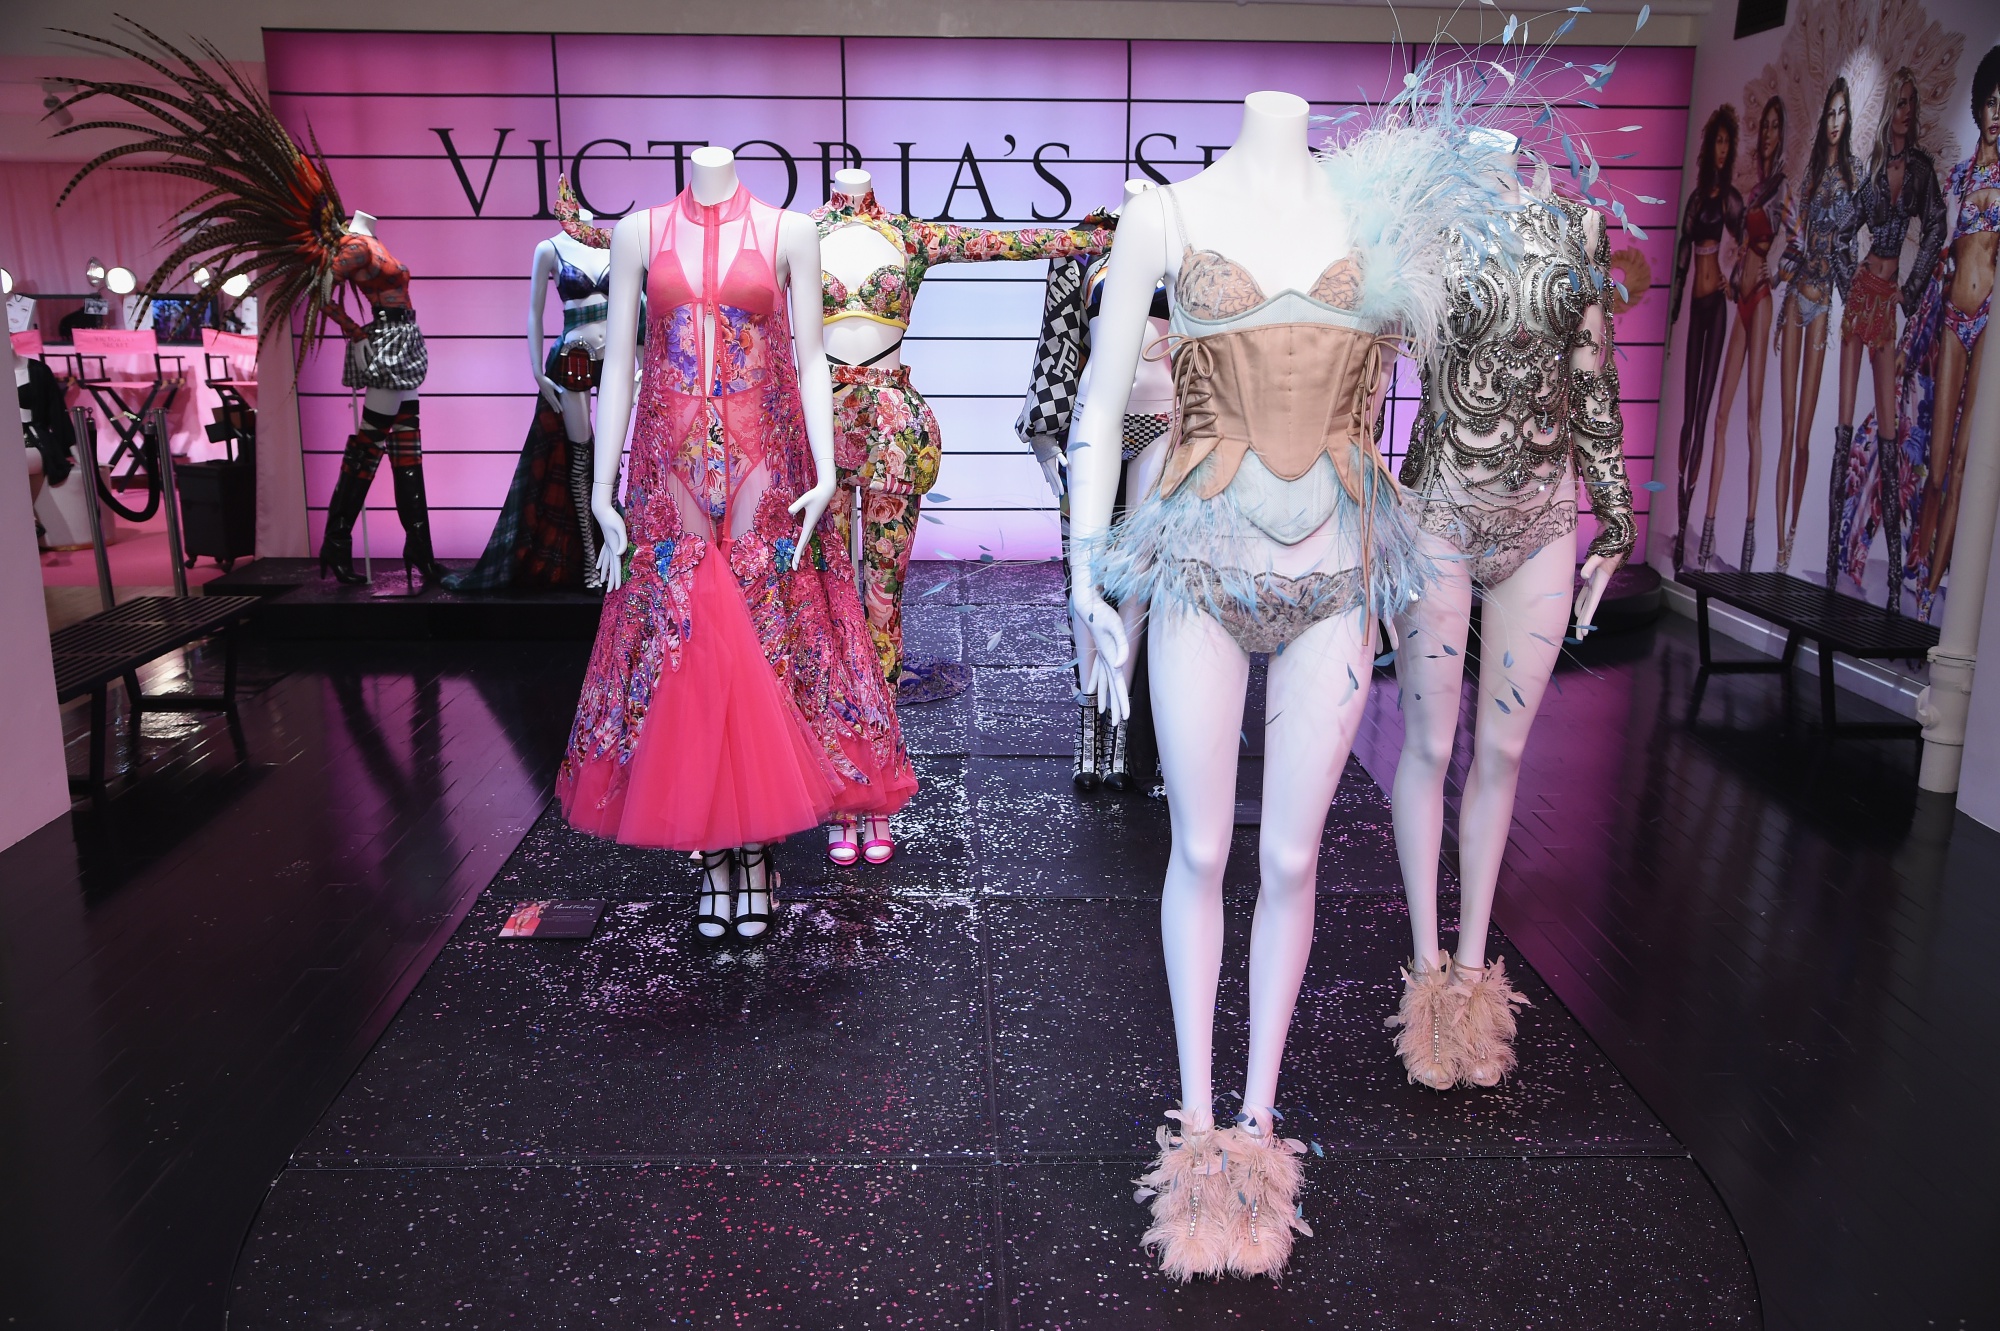 Alert: Lady Gaga's Victoria's Secret Performance Leaked Online